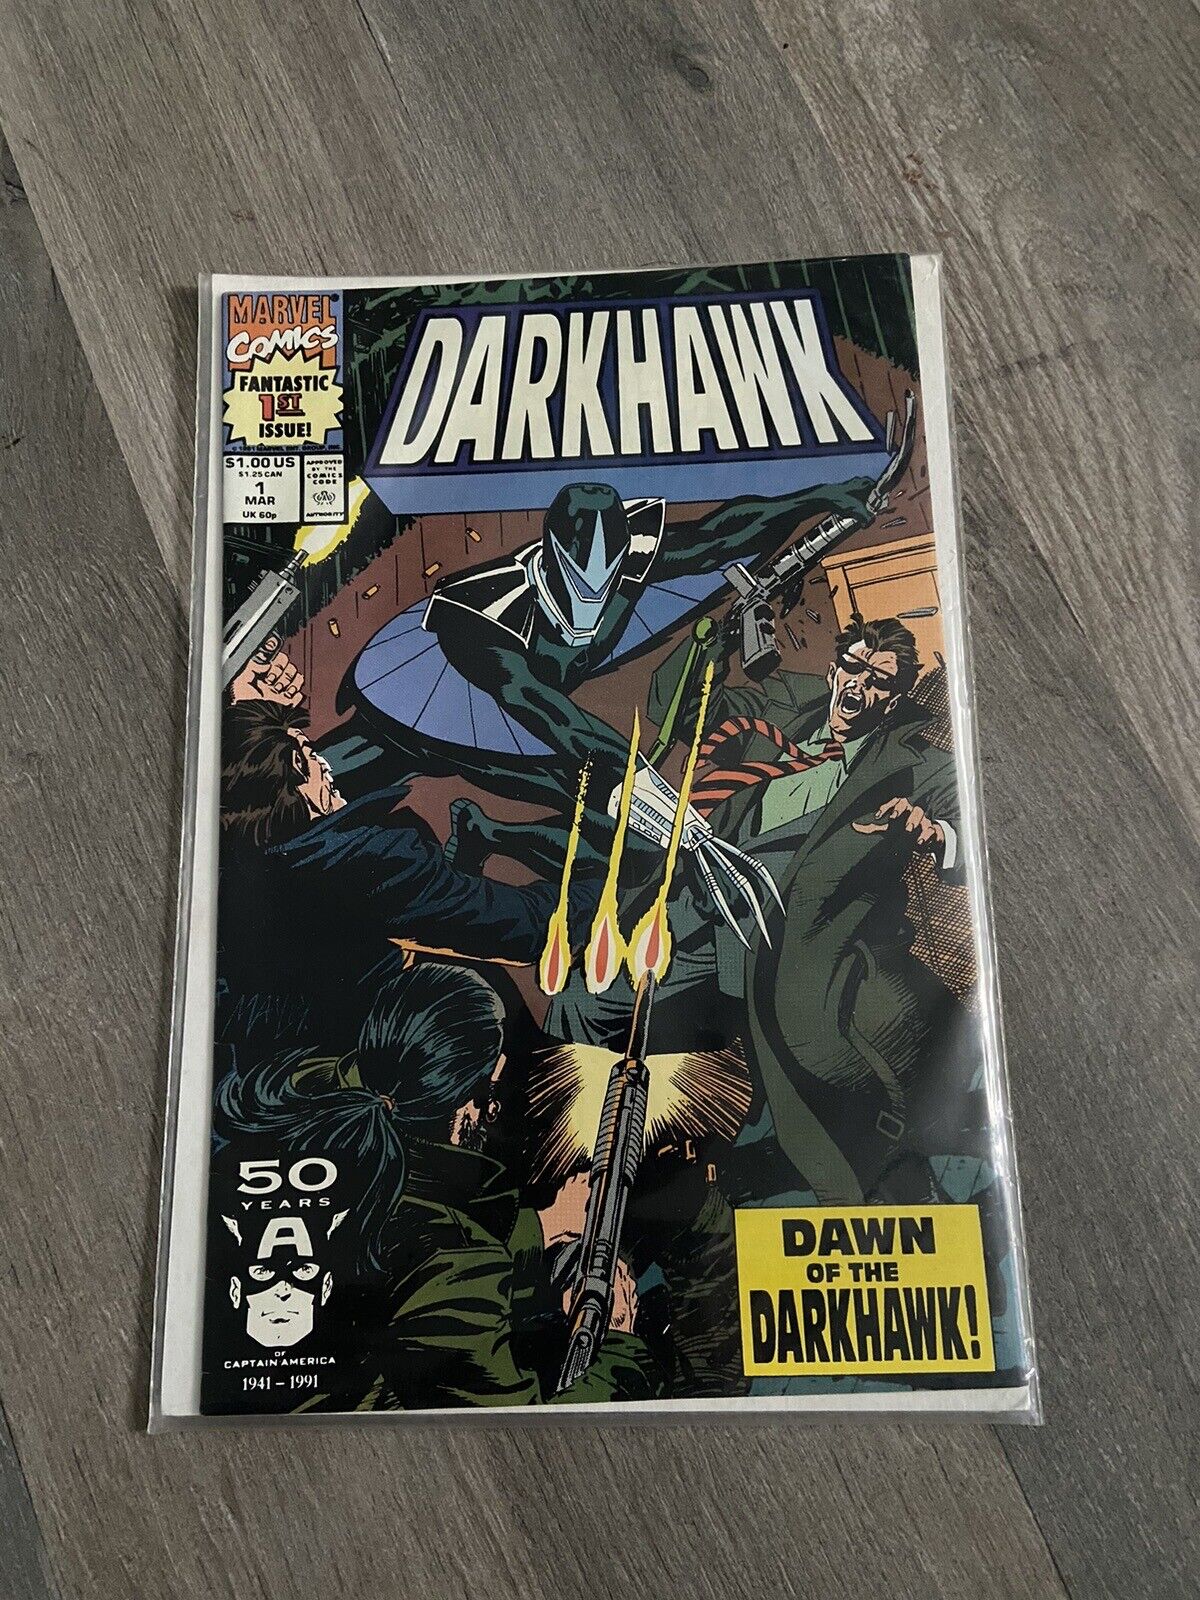 Darkhawk #1 1st Appearance (1991 Marvel Comics) VF+